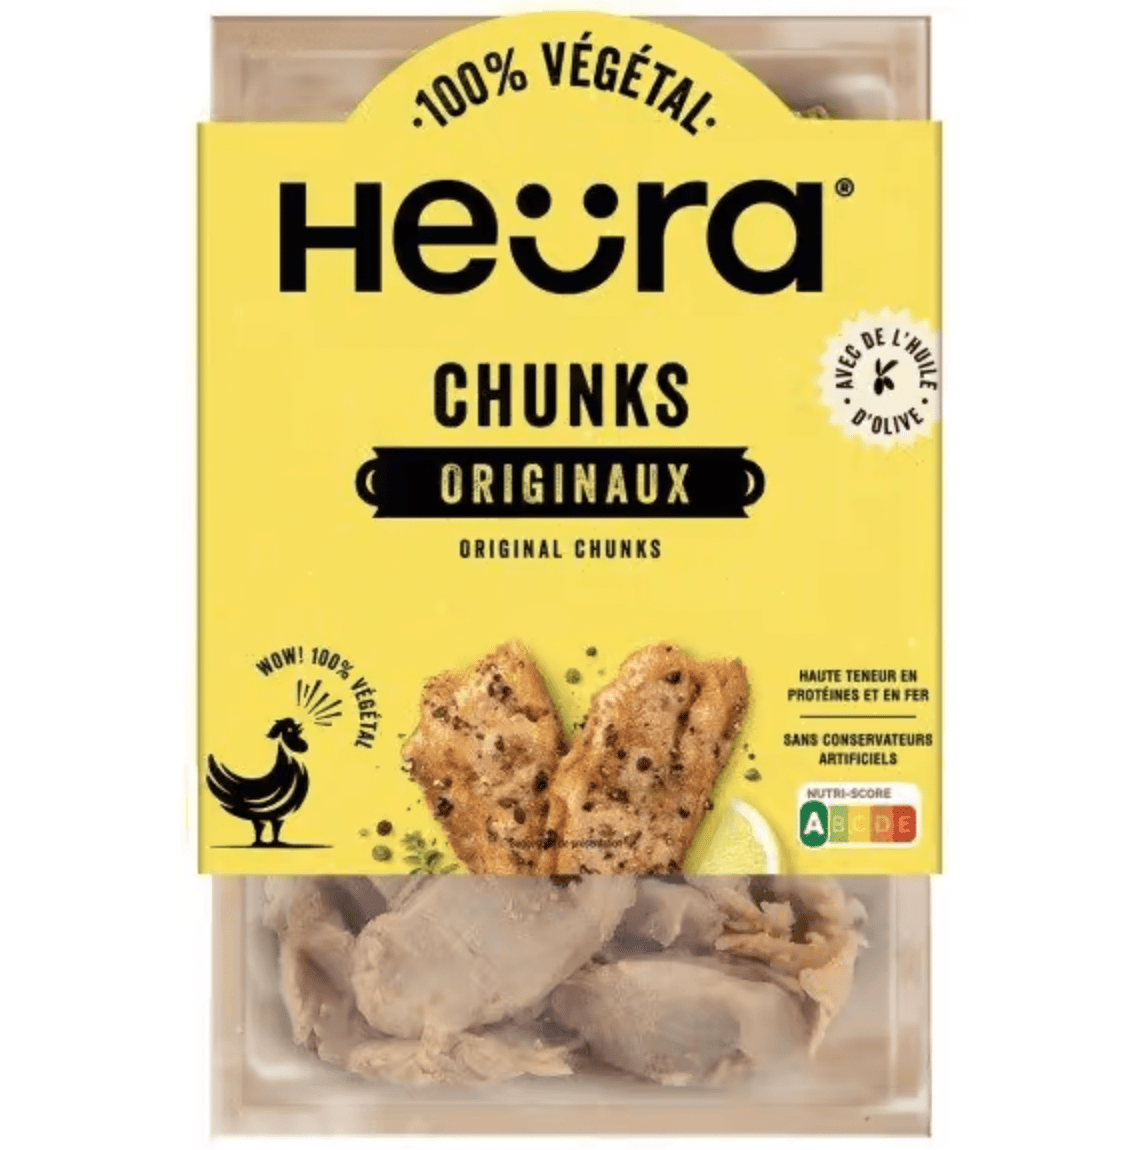 Aiguilettes vegan Heura Foods